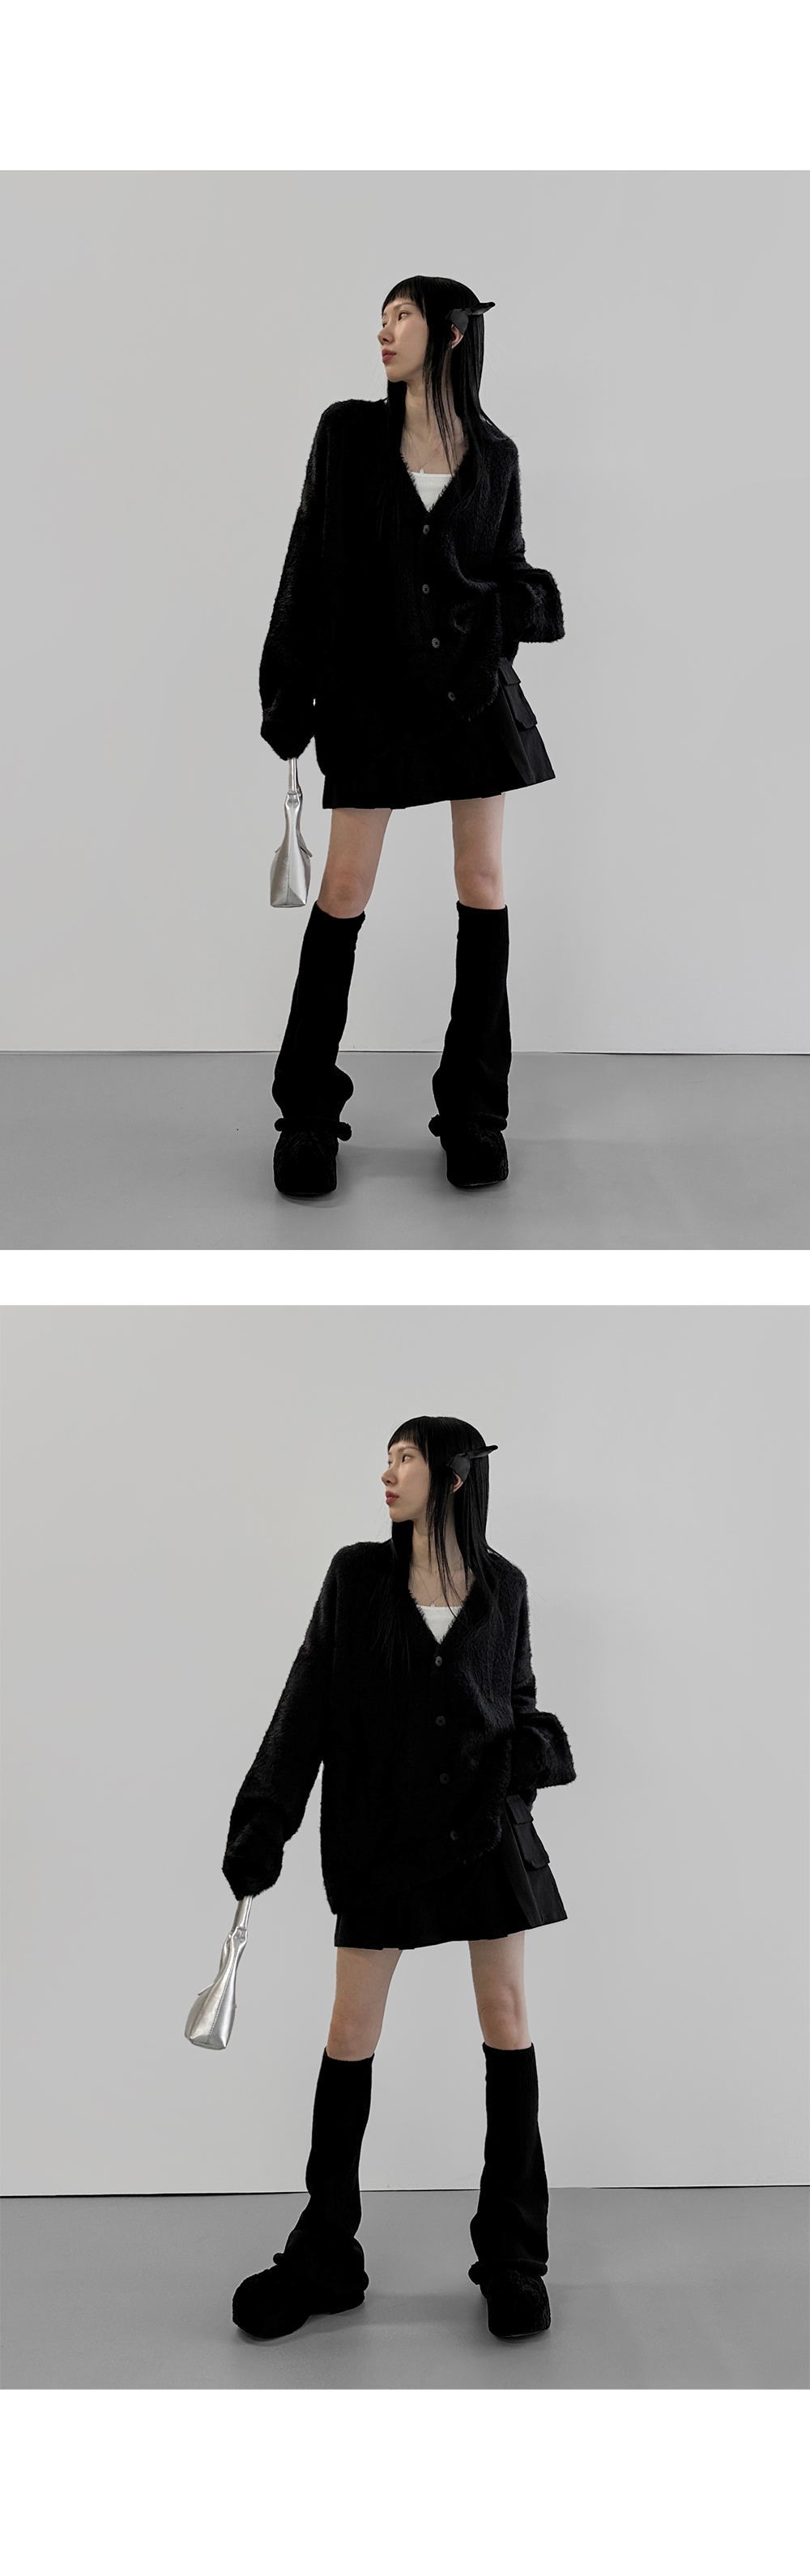 mini skirt model image-S1L5